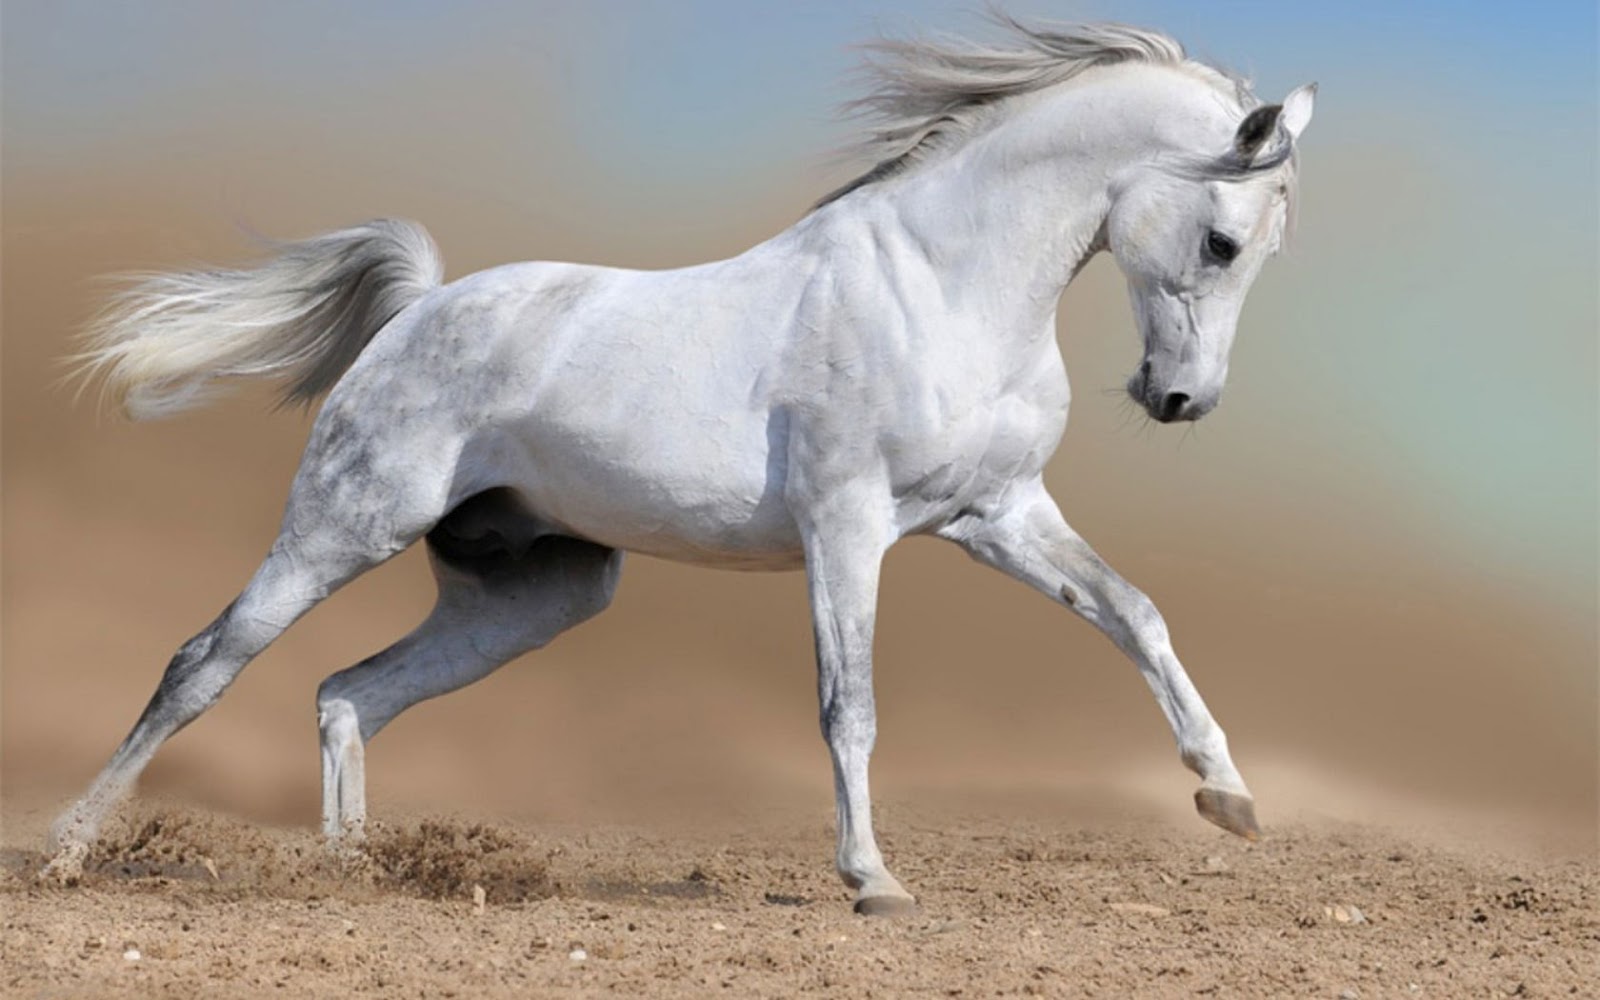 Wallpaper Gallery Beautiful Horse